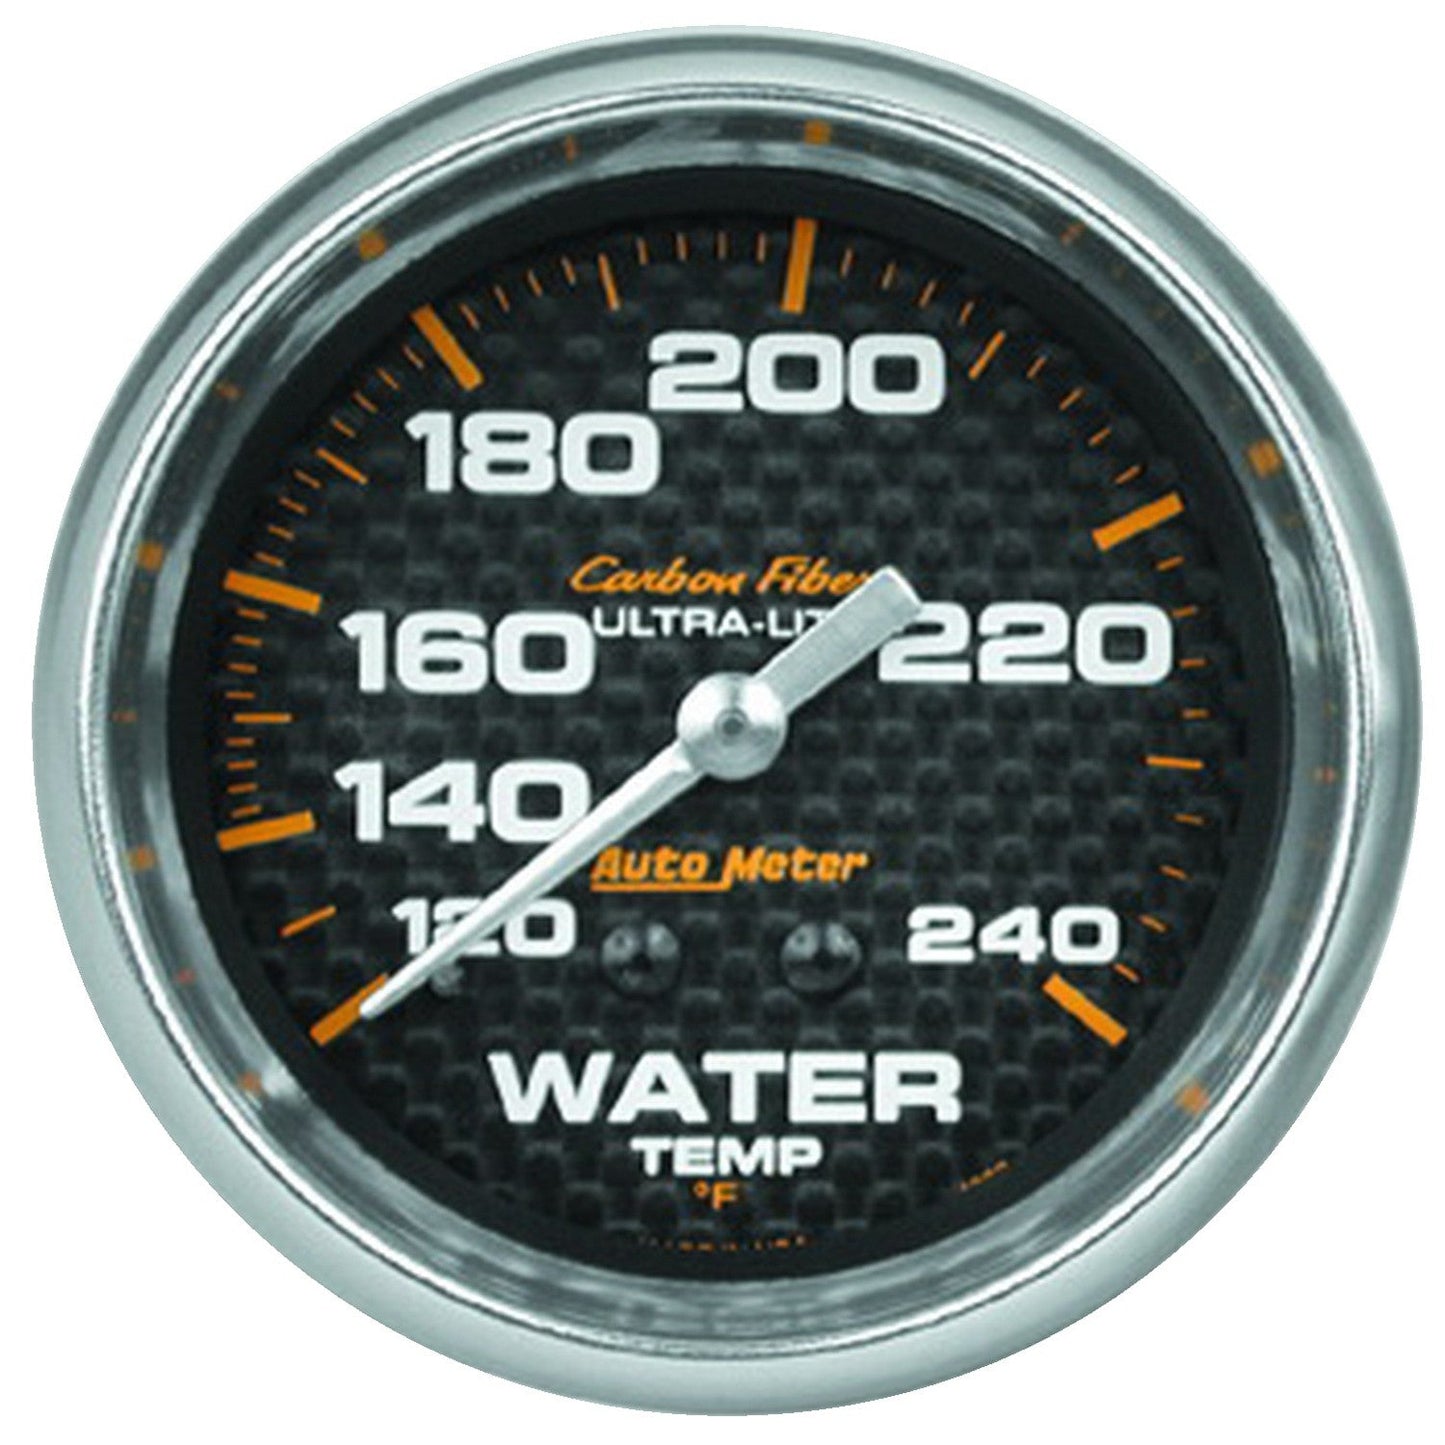 AutoMeter - 2-5/8" WATER TEMPERATURE, 120-240 °F, 6 FT., MECHANICAL, CARBON FIBER (4832)